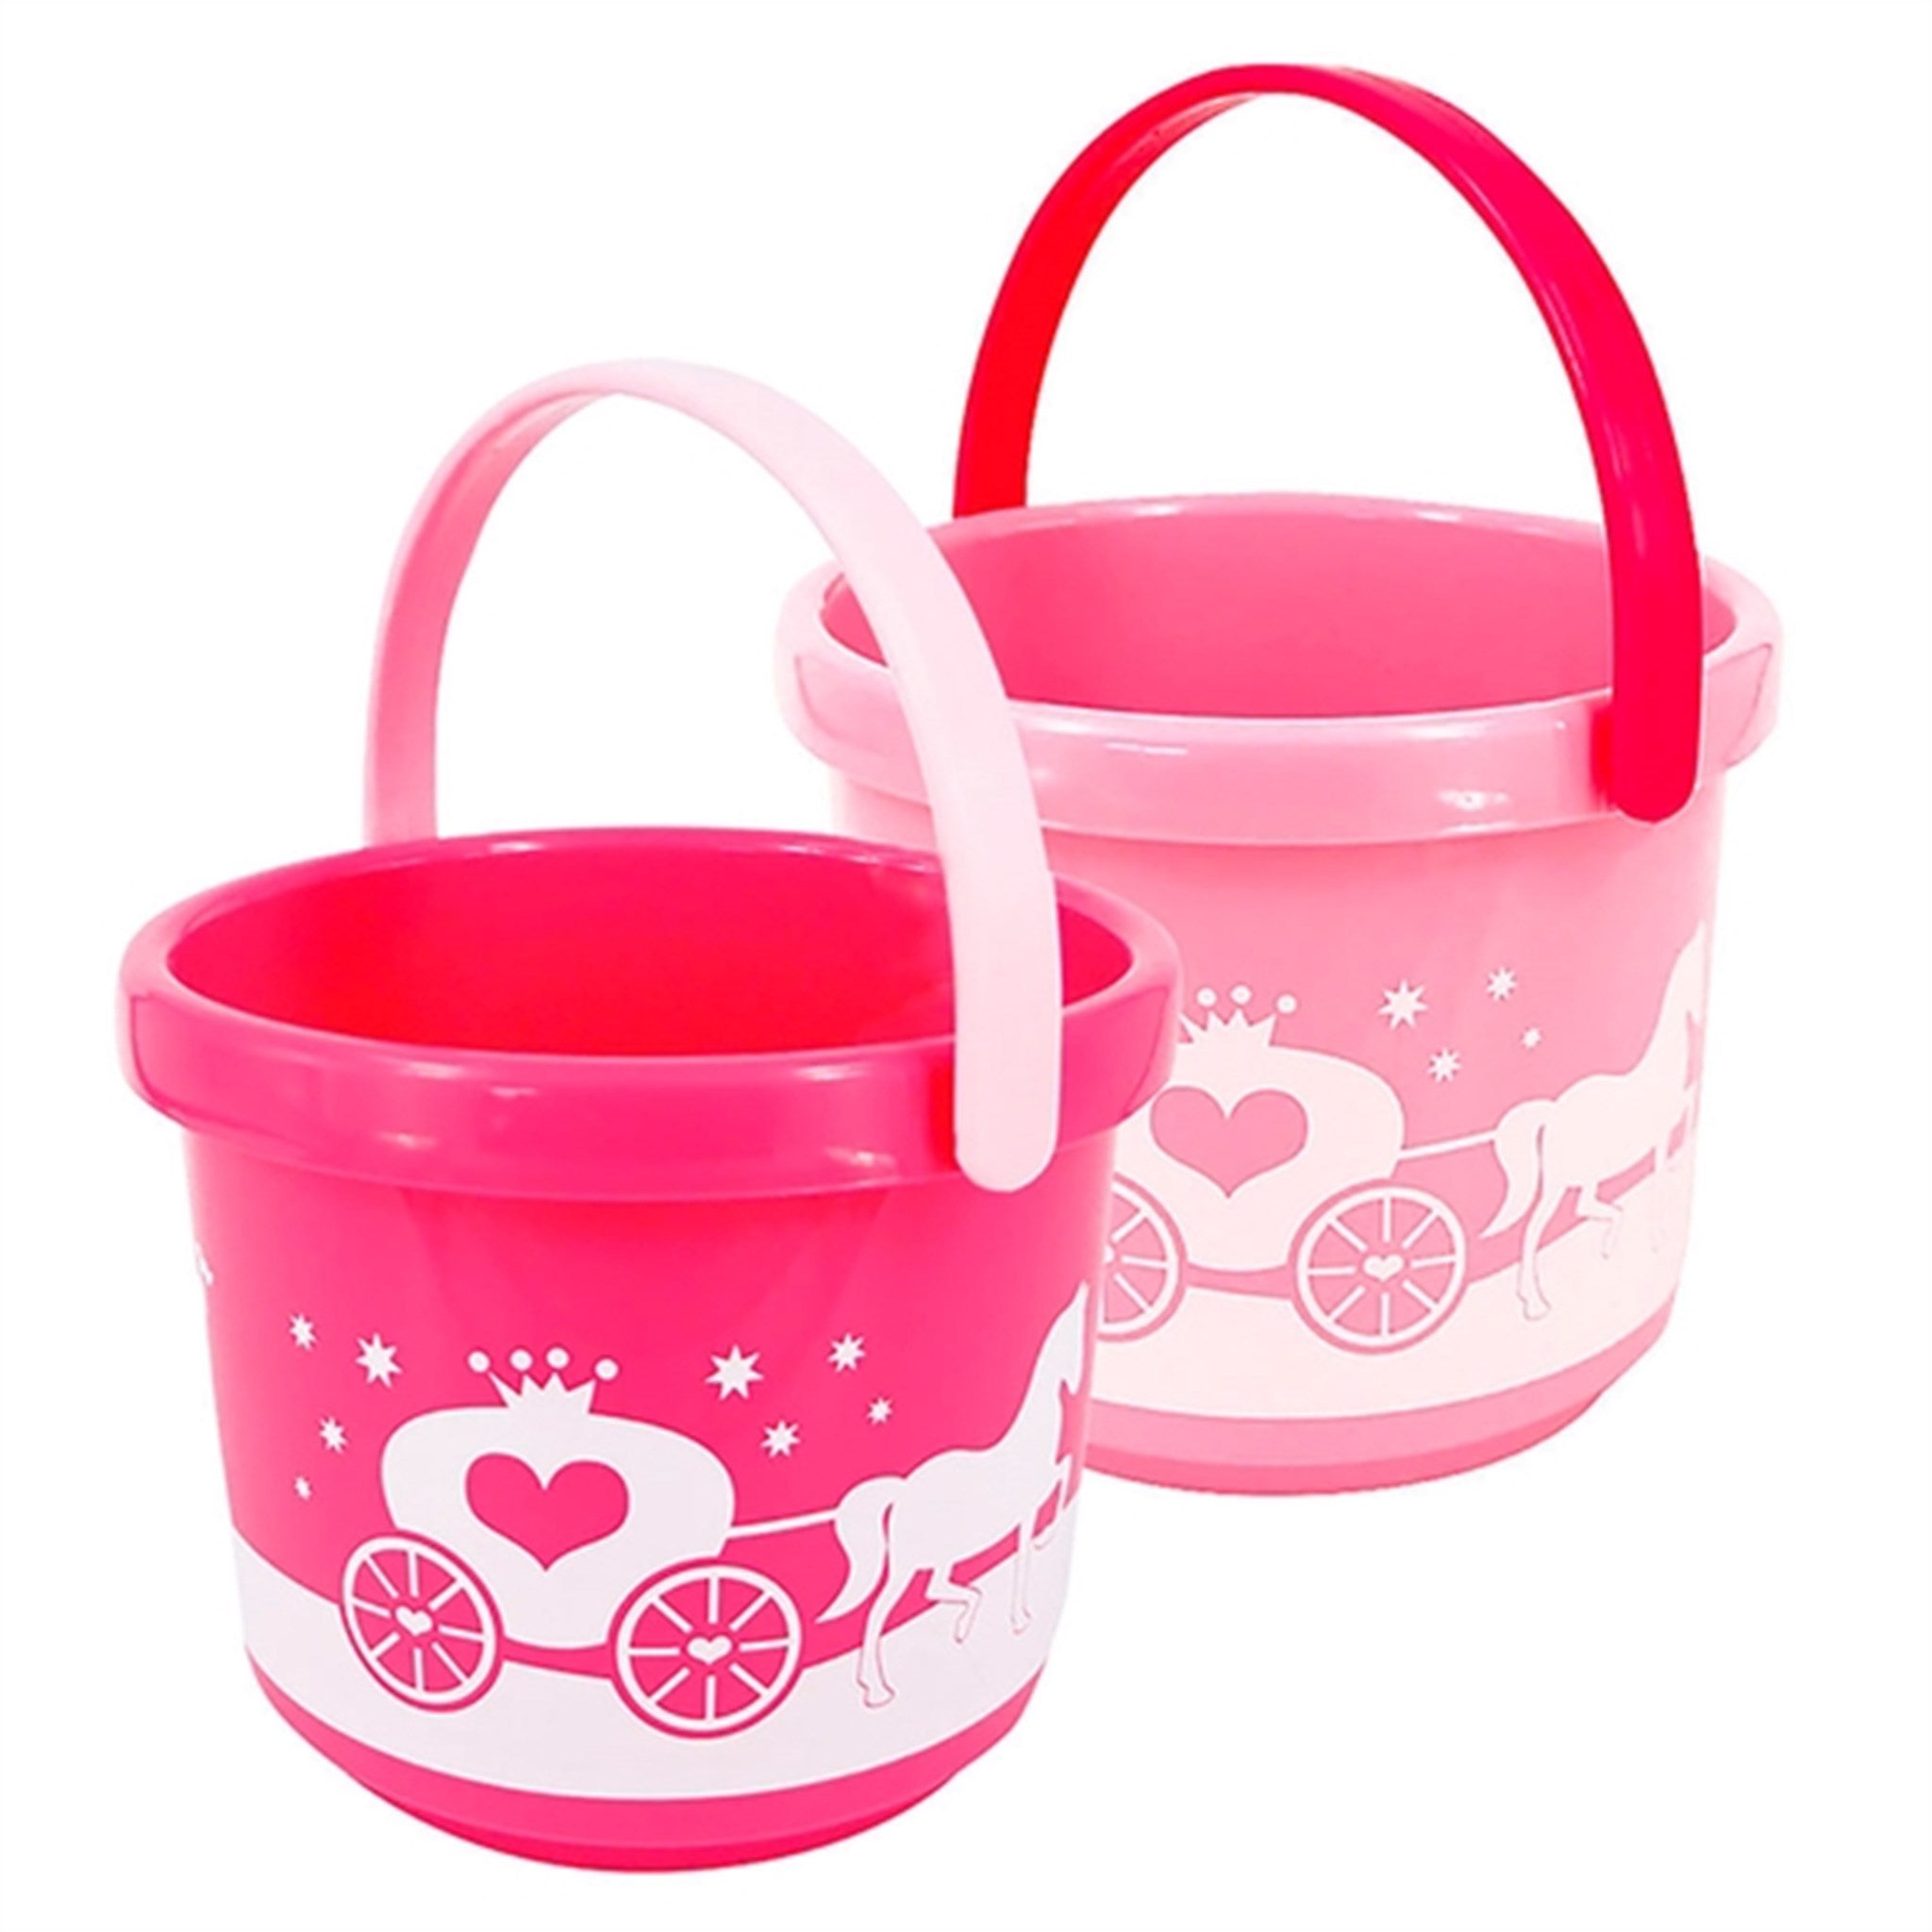 Spielstabil Small Bucket Princess - Pink 2